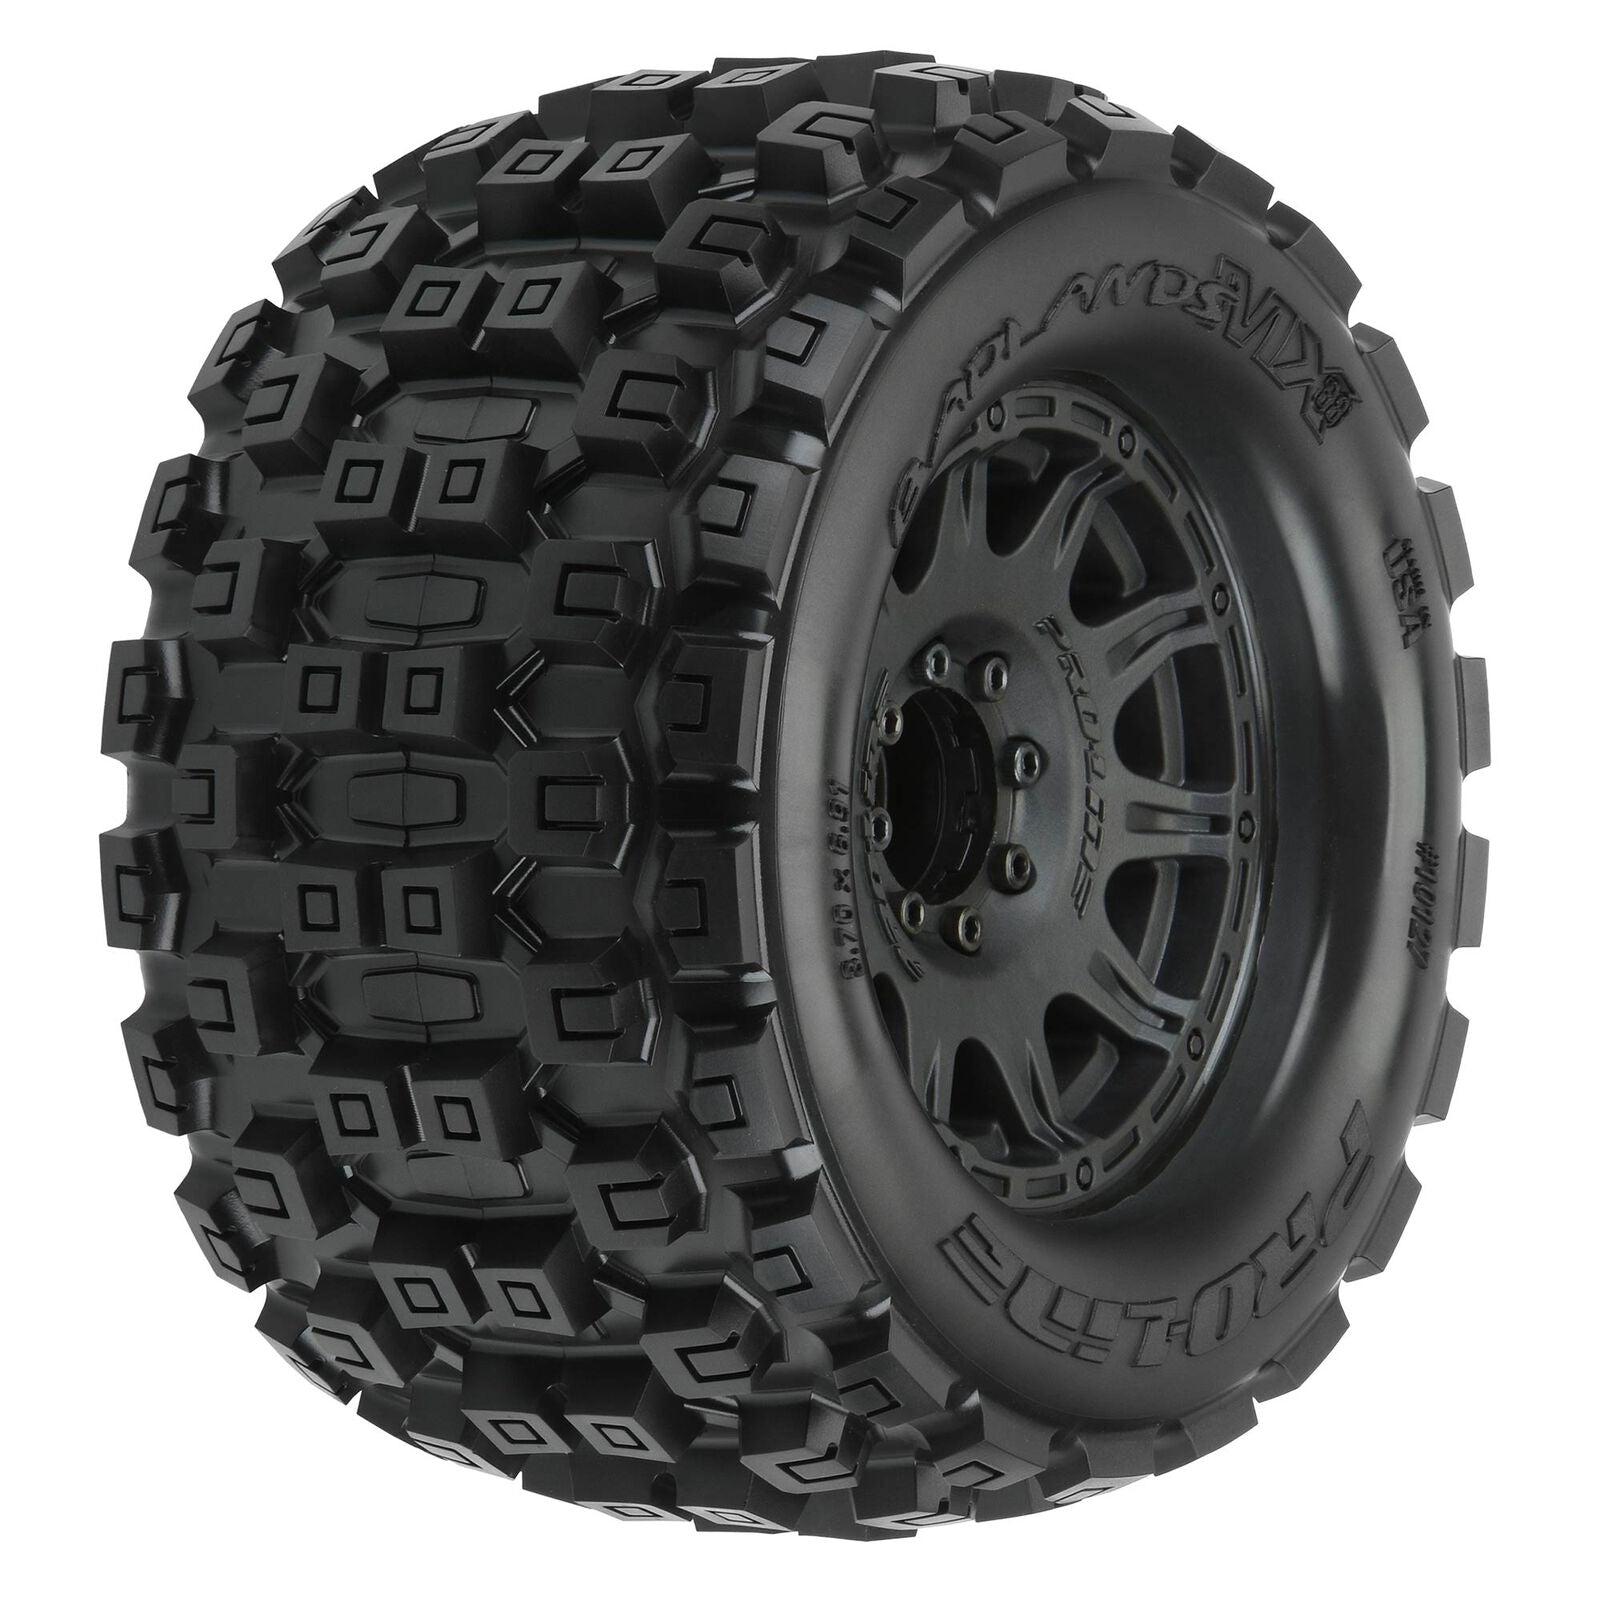 PROLINE 10127-10 1/8 Badlands MX38 F/R 3.8" MT Tires Mounted 17mm Blk Raid (2)